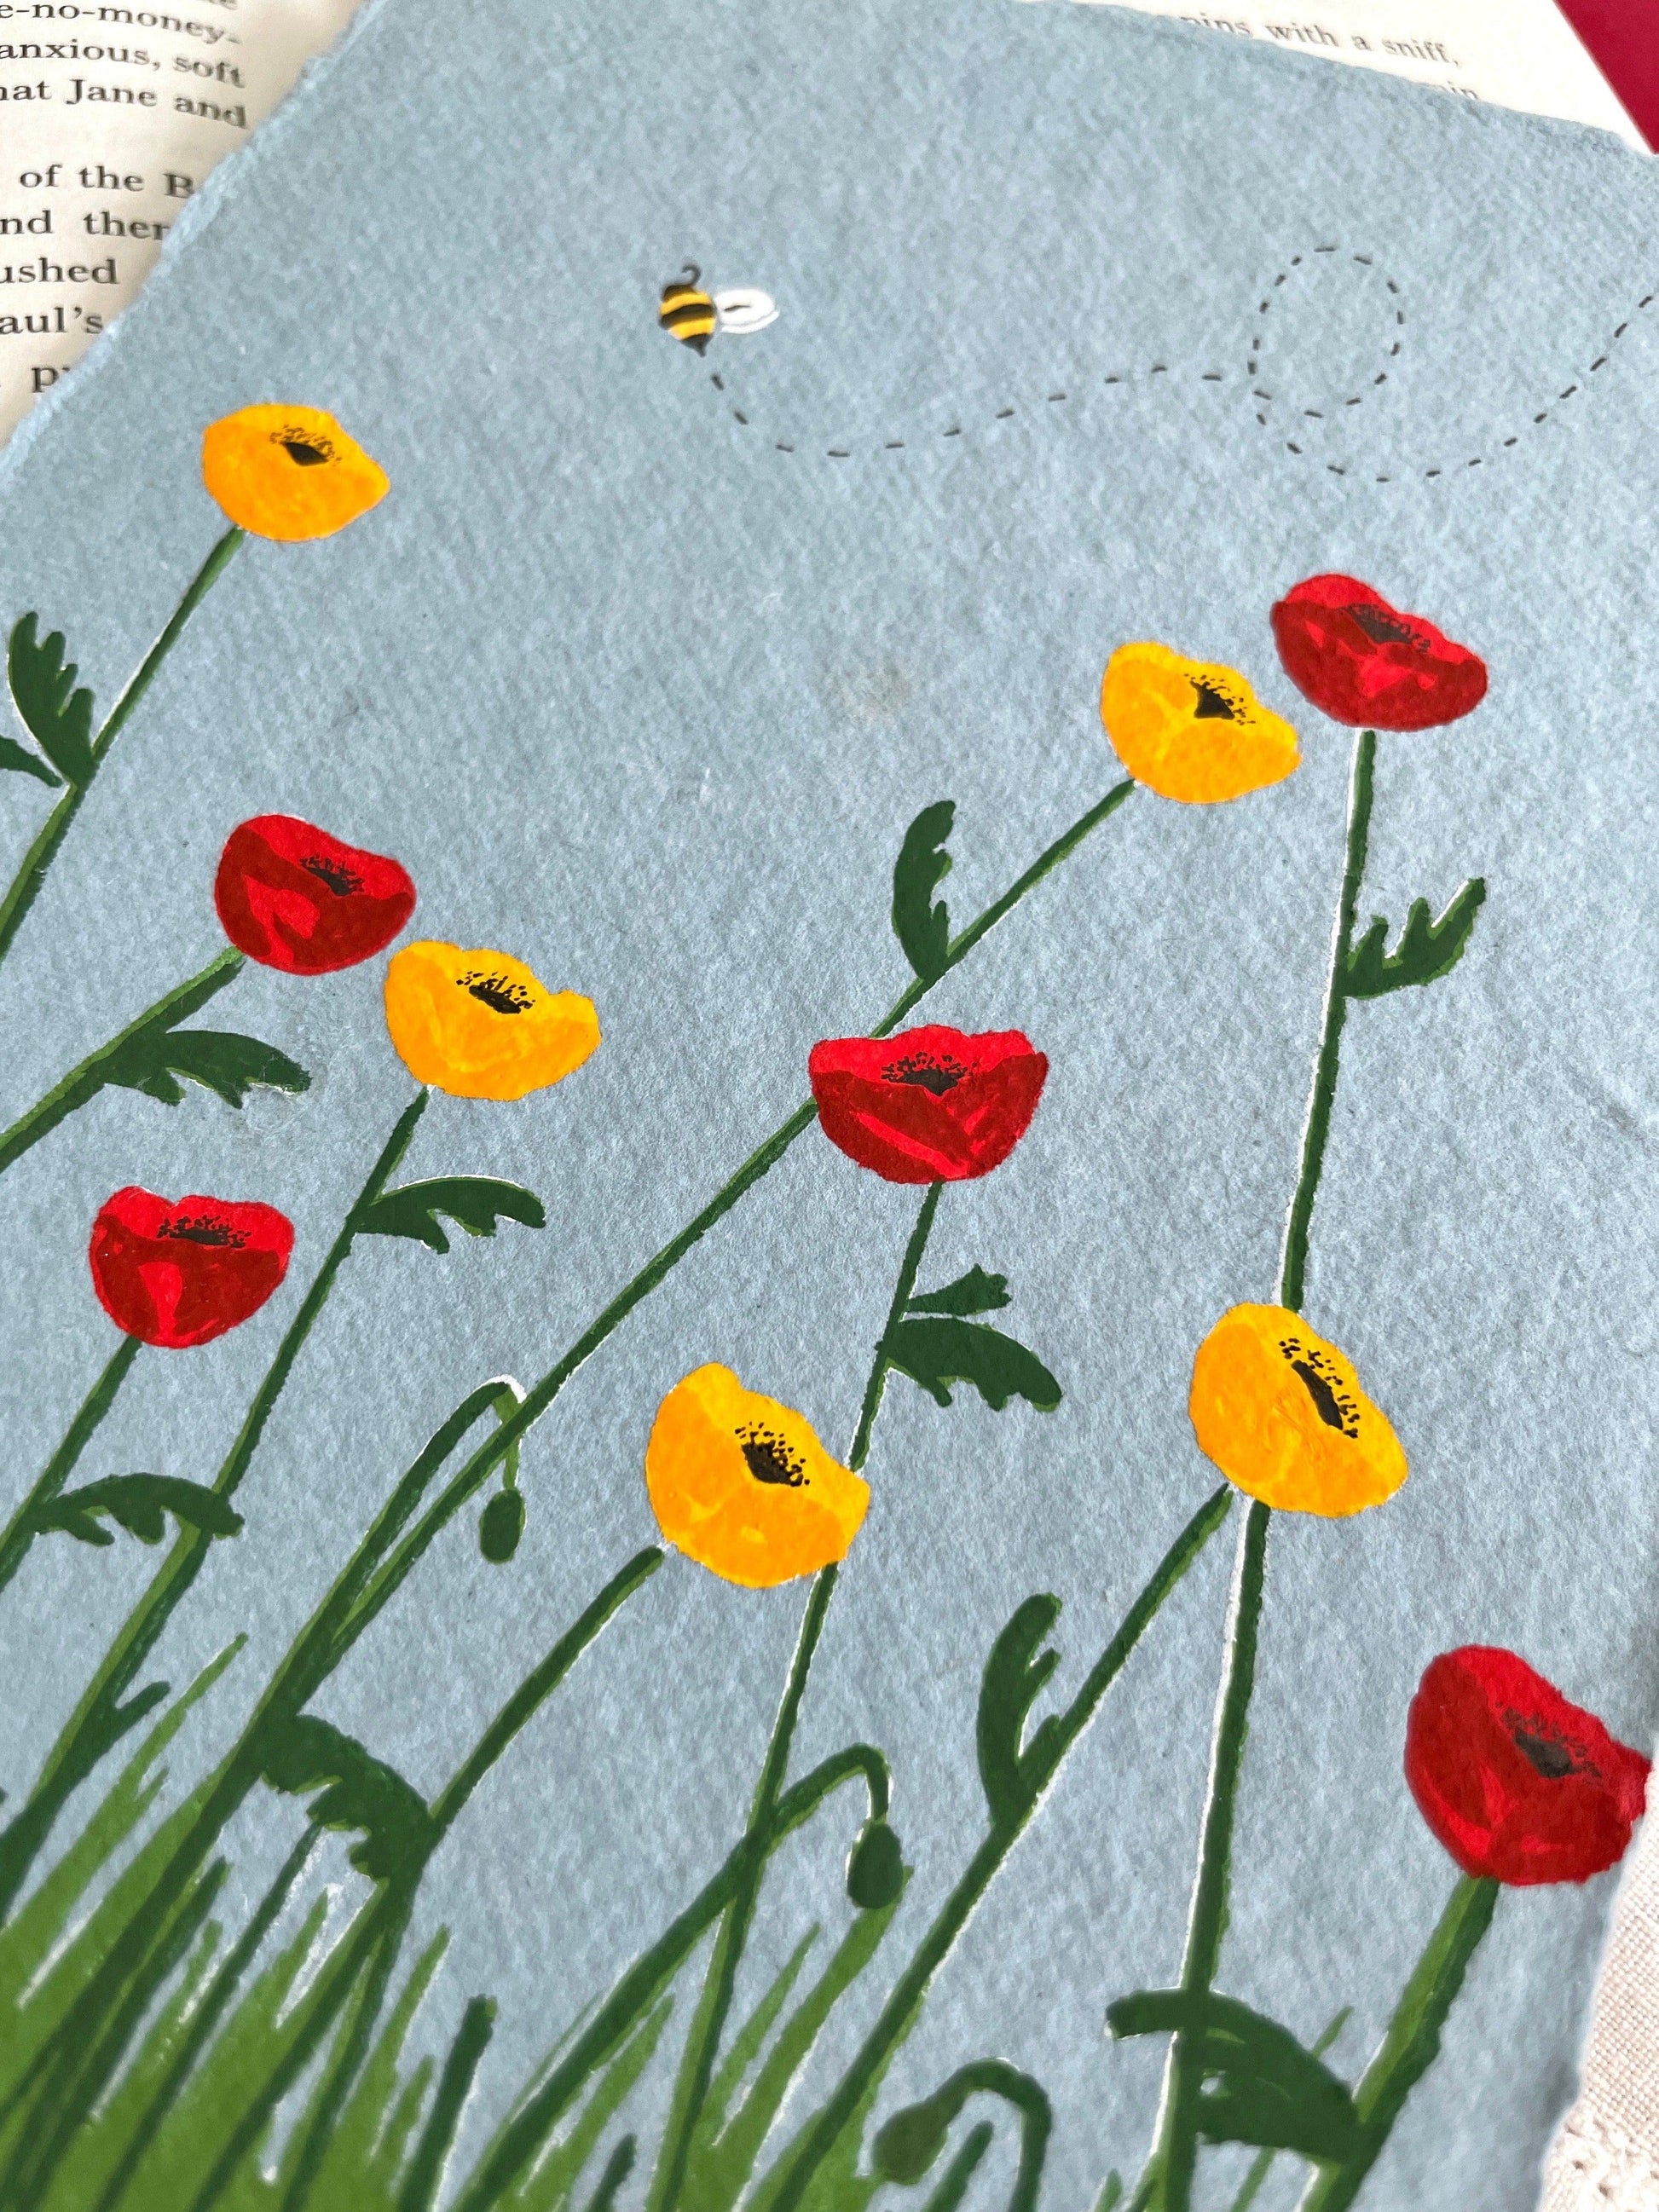 Poppy Field Gouache Original 5x7 Painting on Cotton Rag Paper - Lilyvine Design